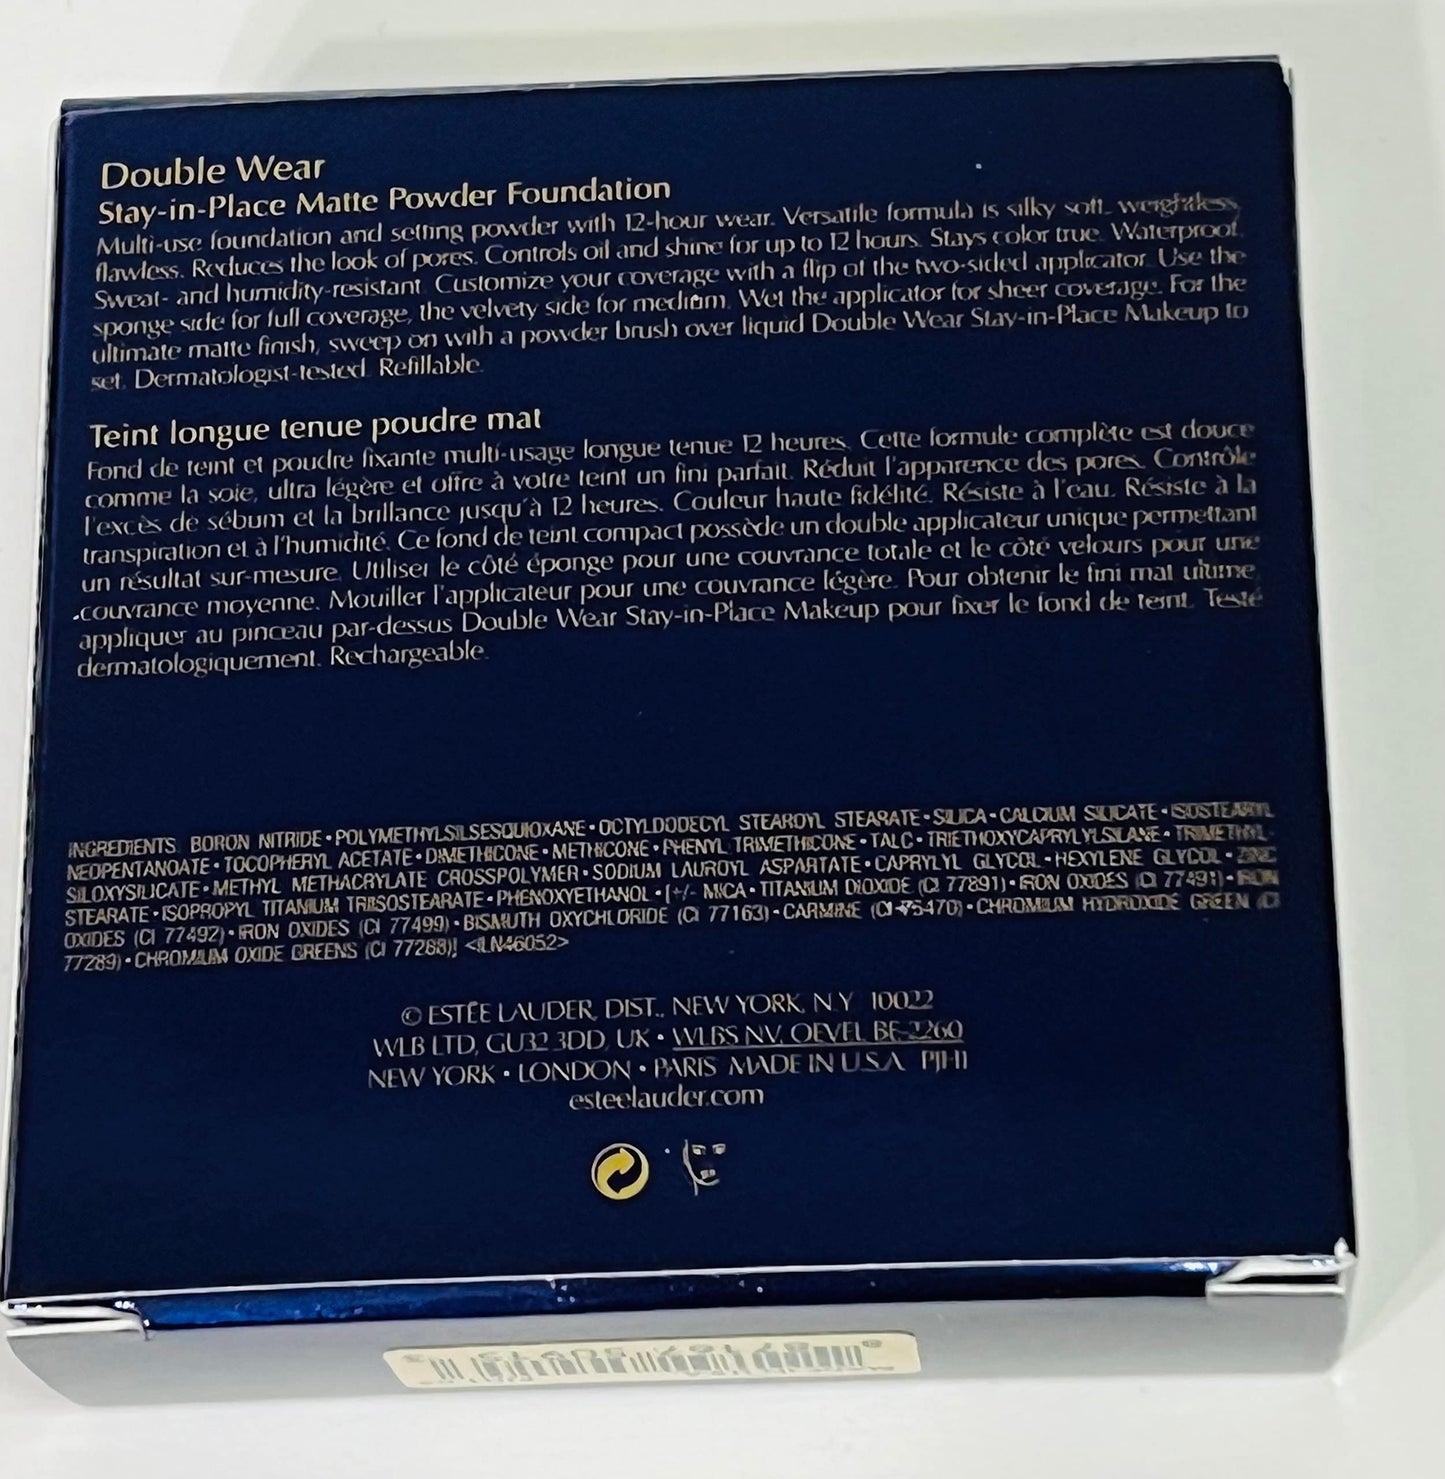 Estee Lauder Double Wear Stay-in-Place Matte Refillable Powder Foundation 4N1 Shell Beige, 0.42 oz/ 12 g